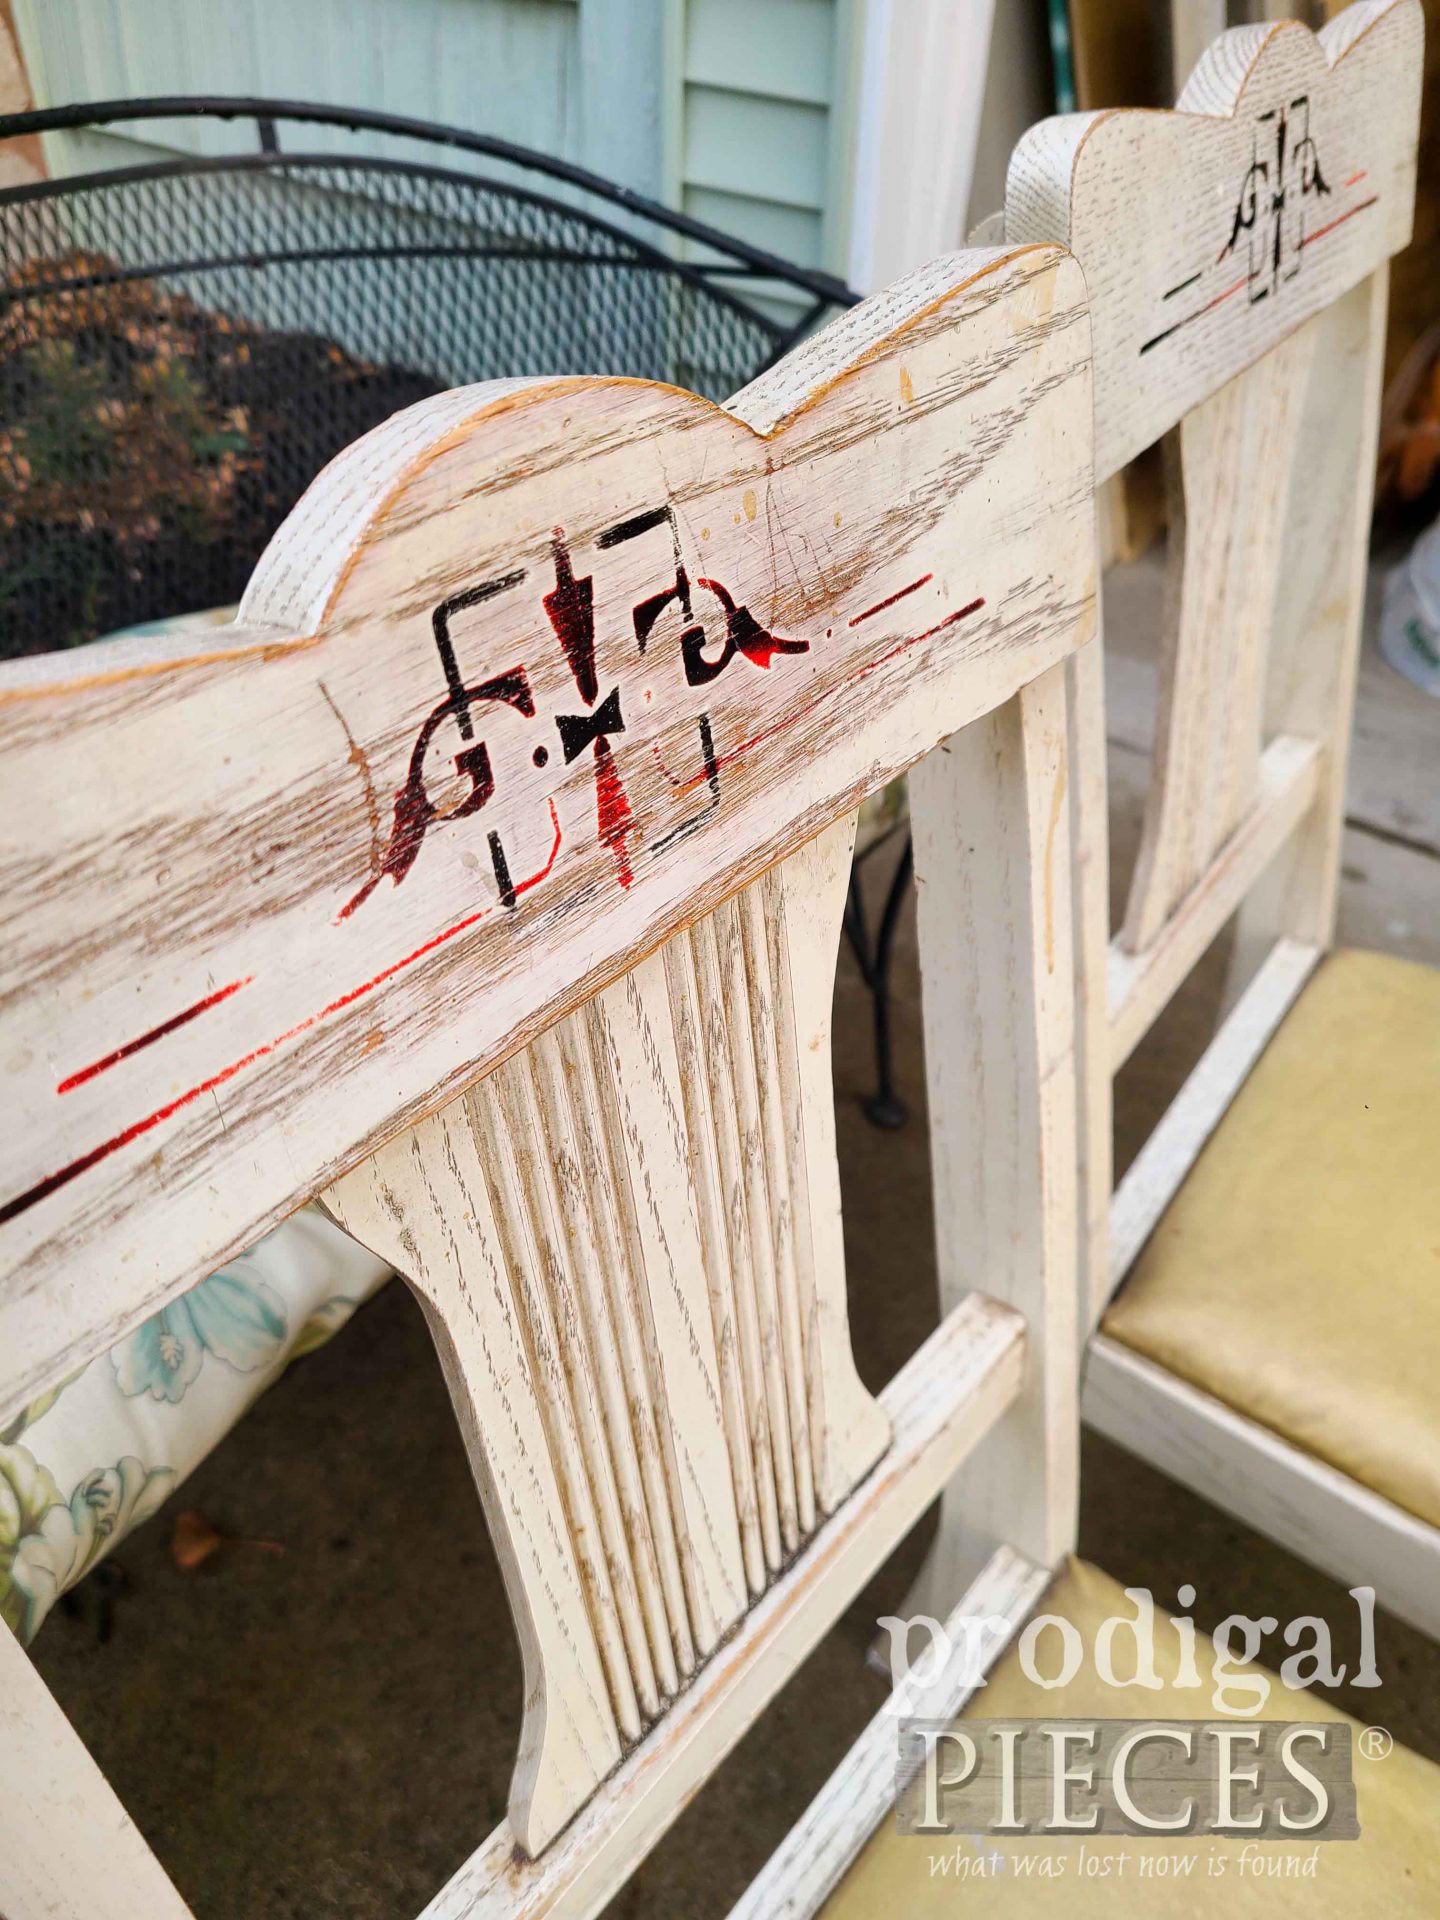 Vintage Chair Splats with Time-worn Wear | prodigalpieces.com #prodigalpieces